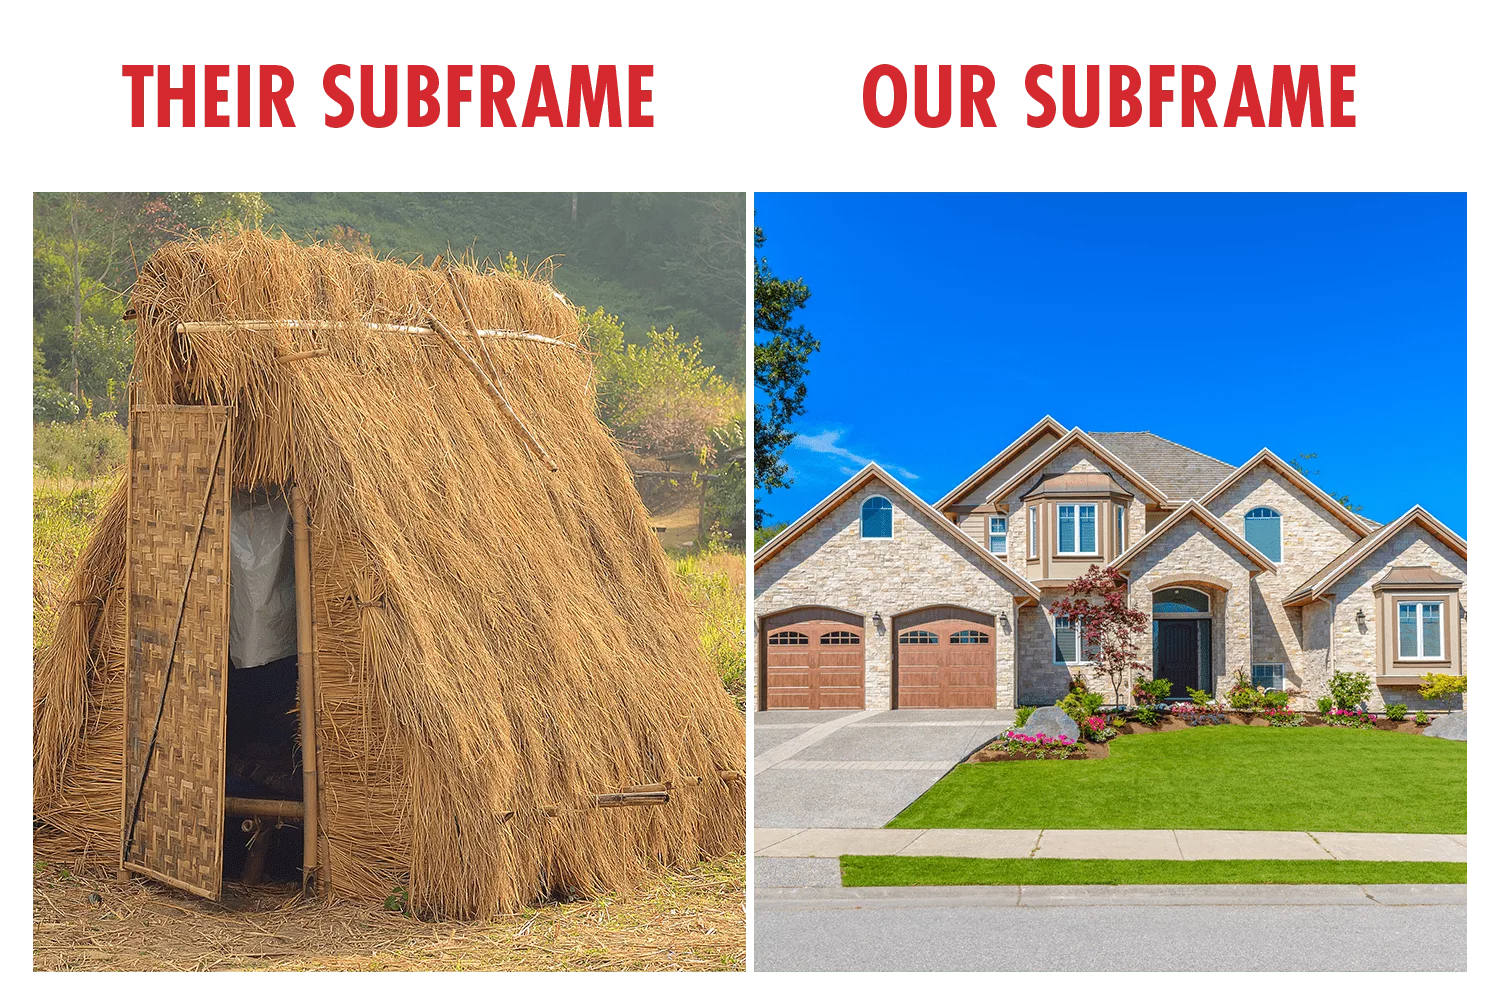 their subframe vs our subframe